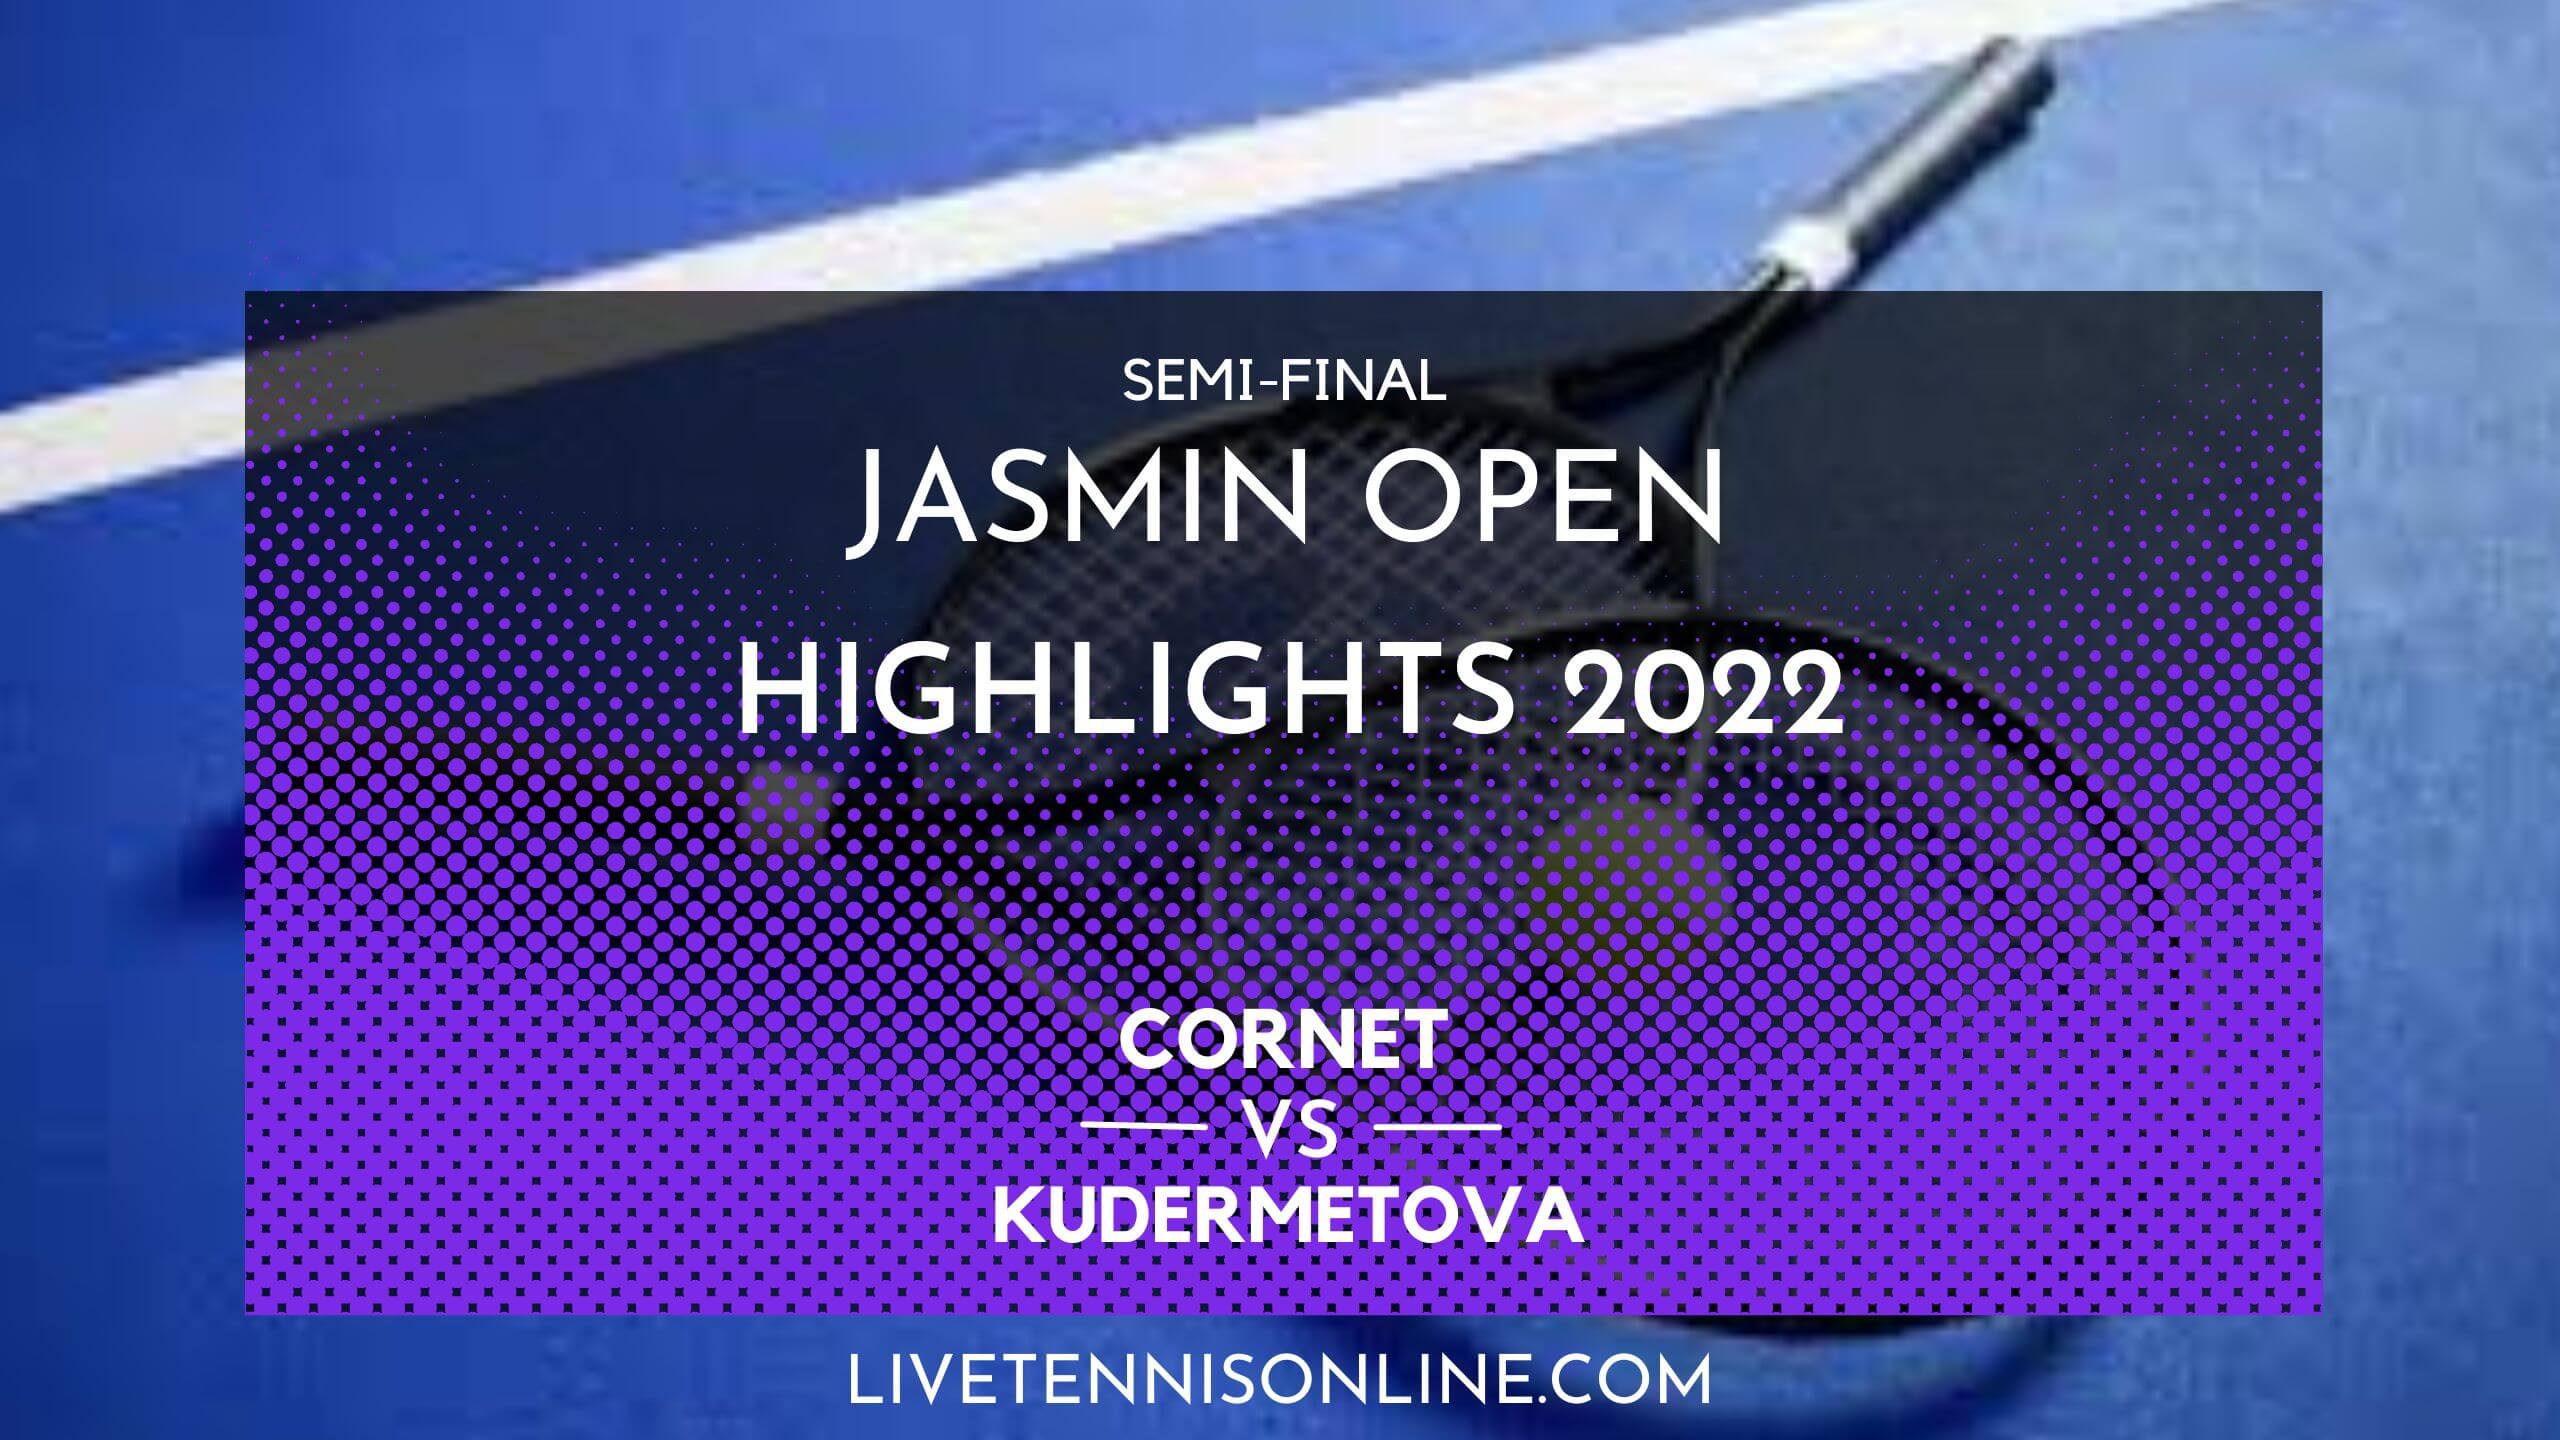 Cornet Vs Kudermetova SF Highlights 2022 Jasmin Open